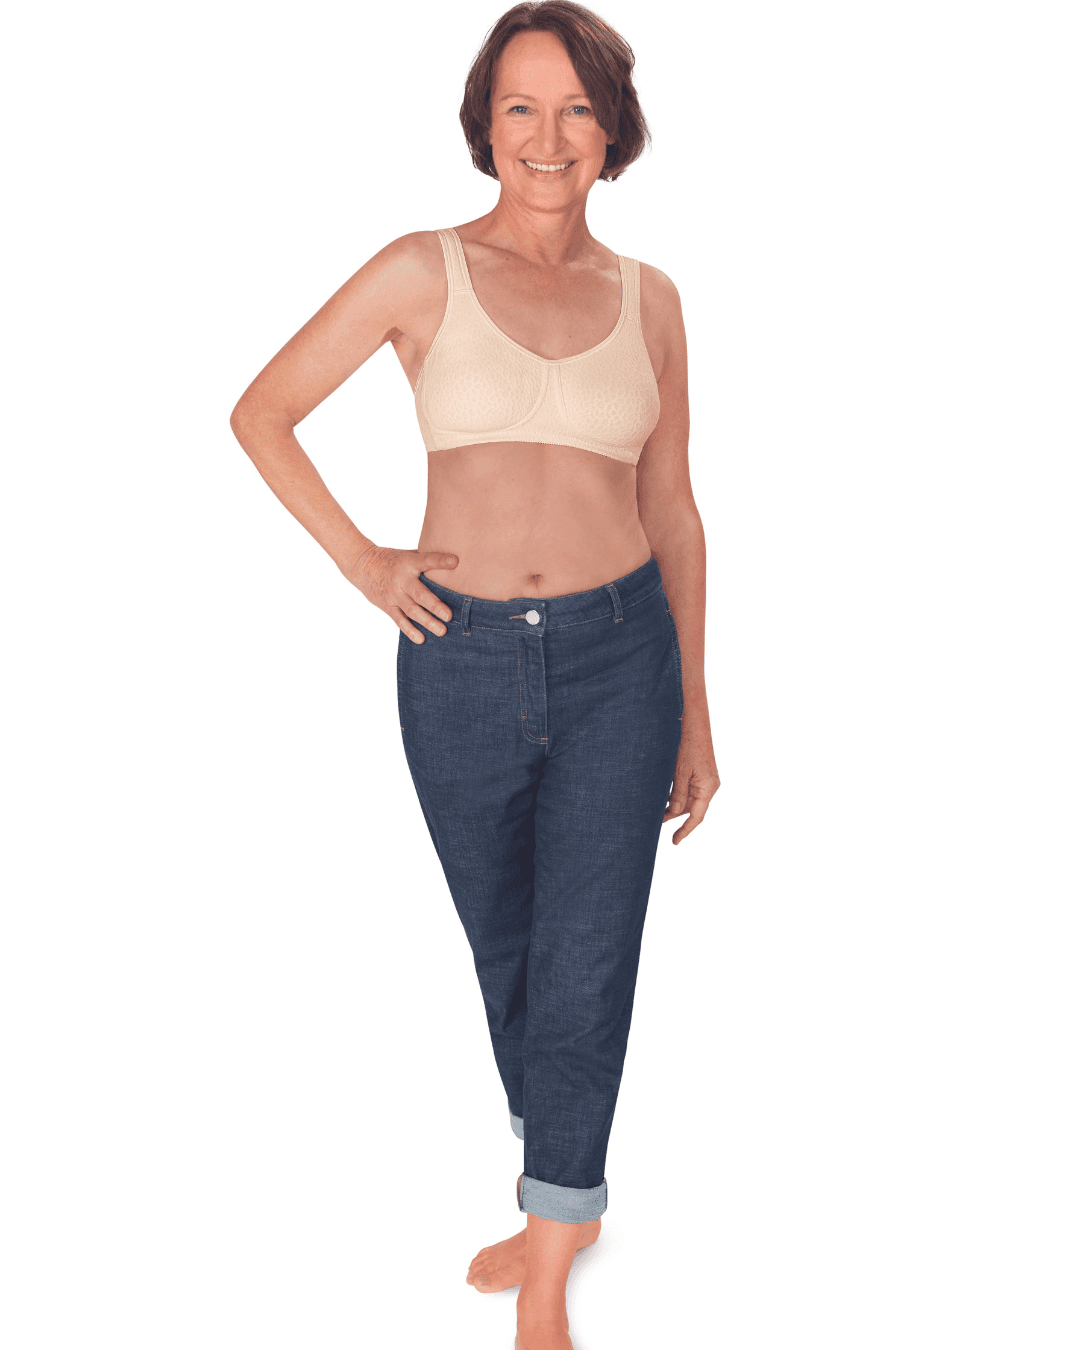 Amoena Mona Non-Wired Mastectomy bra | The Fitting Service